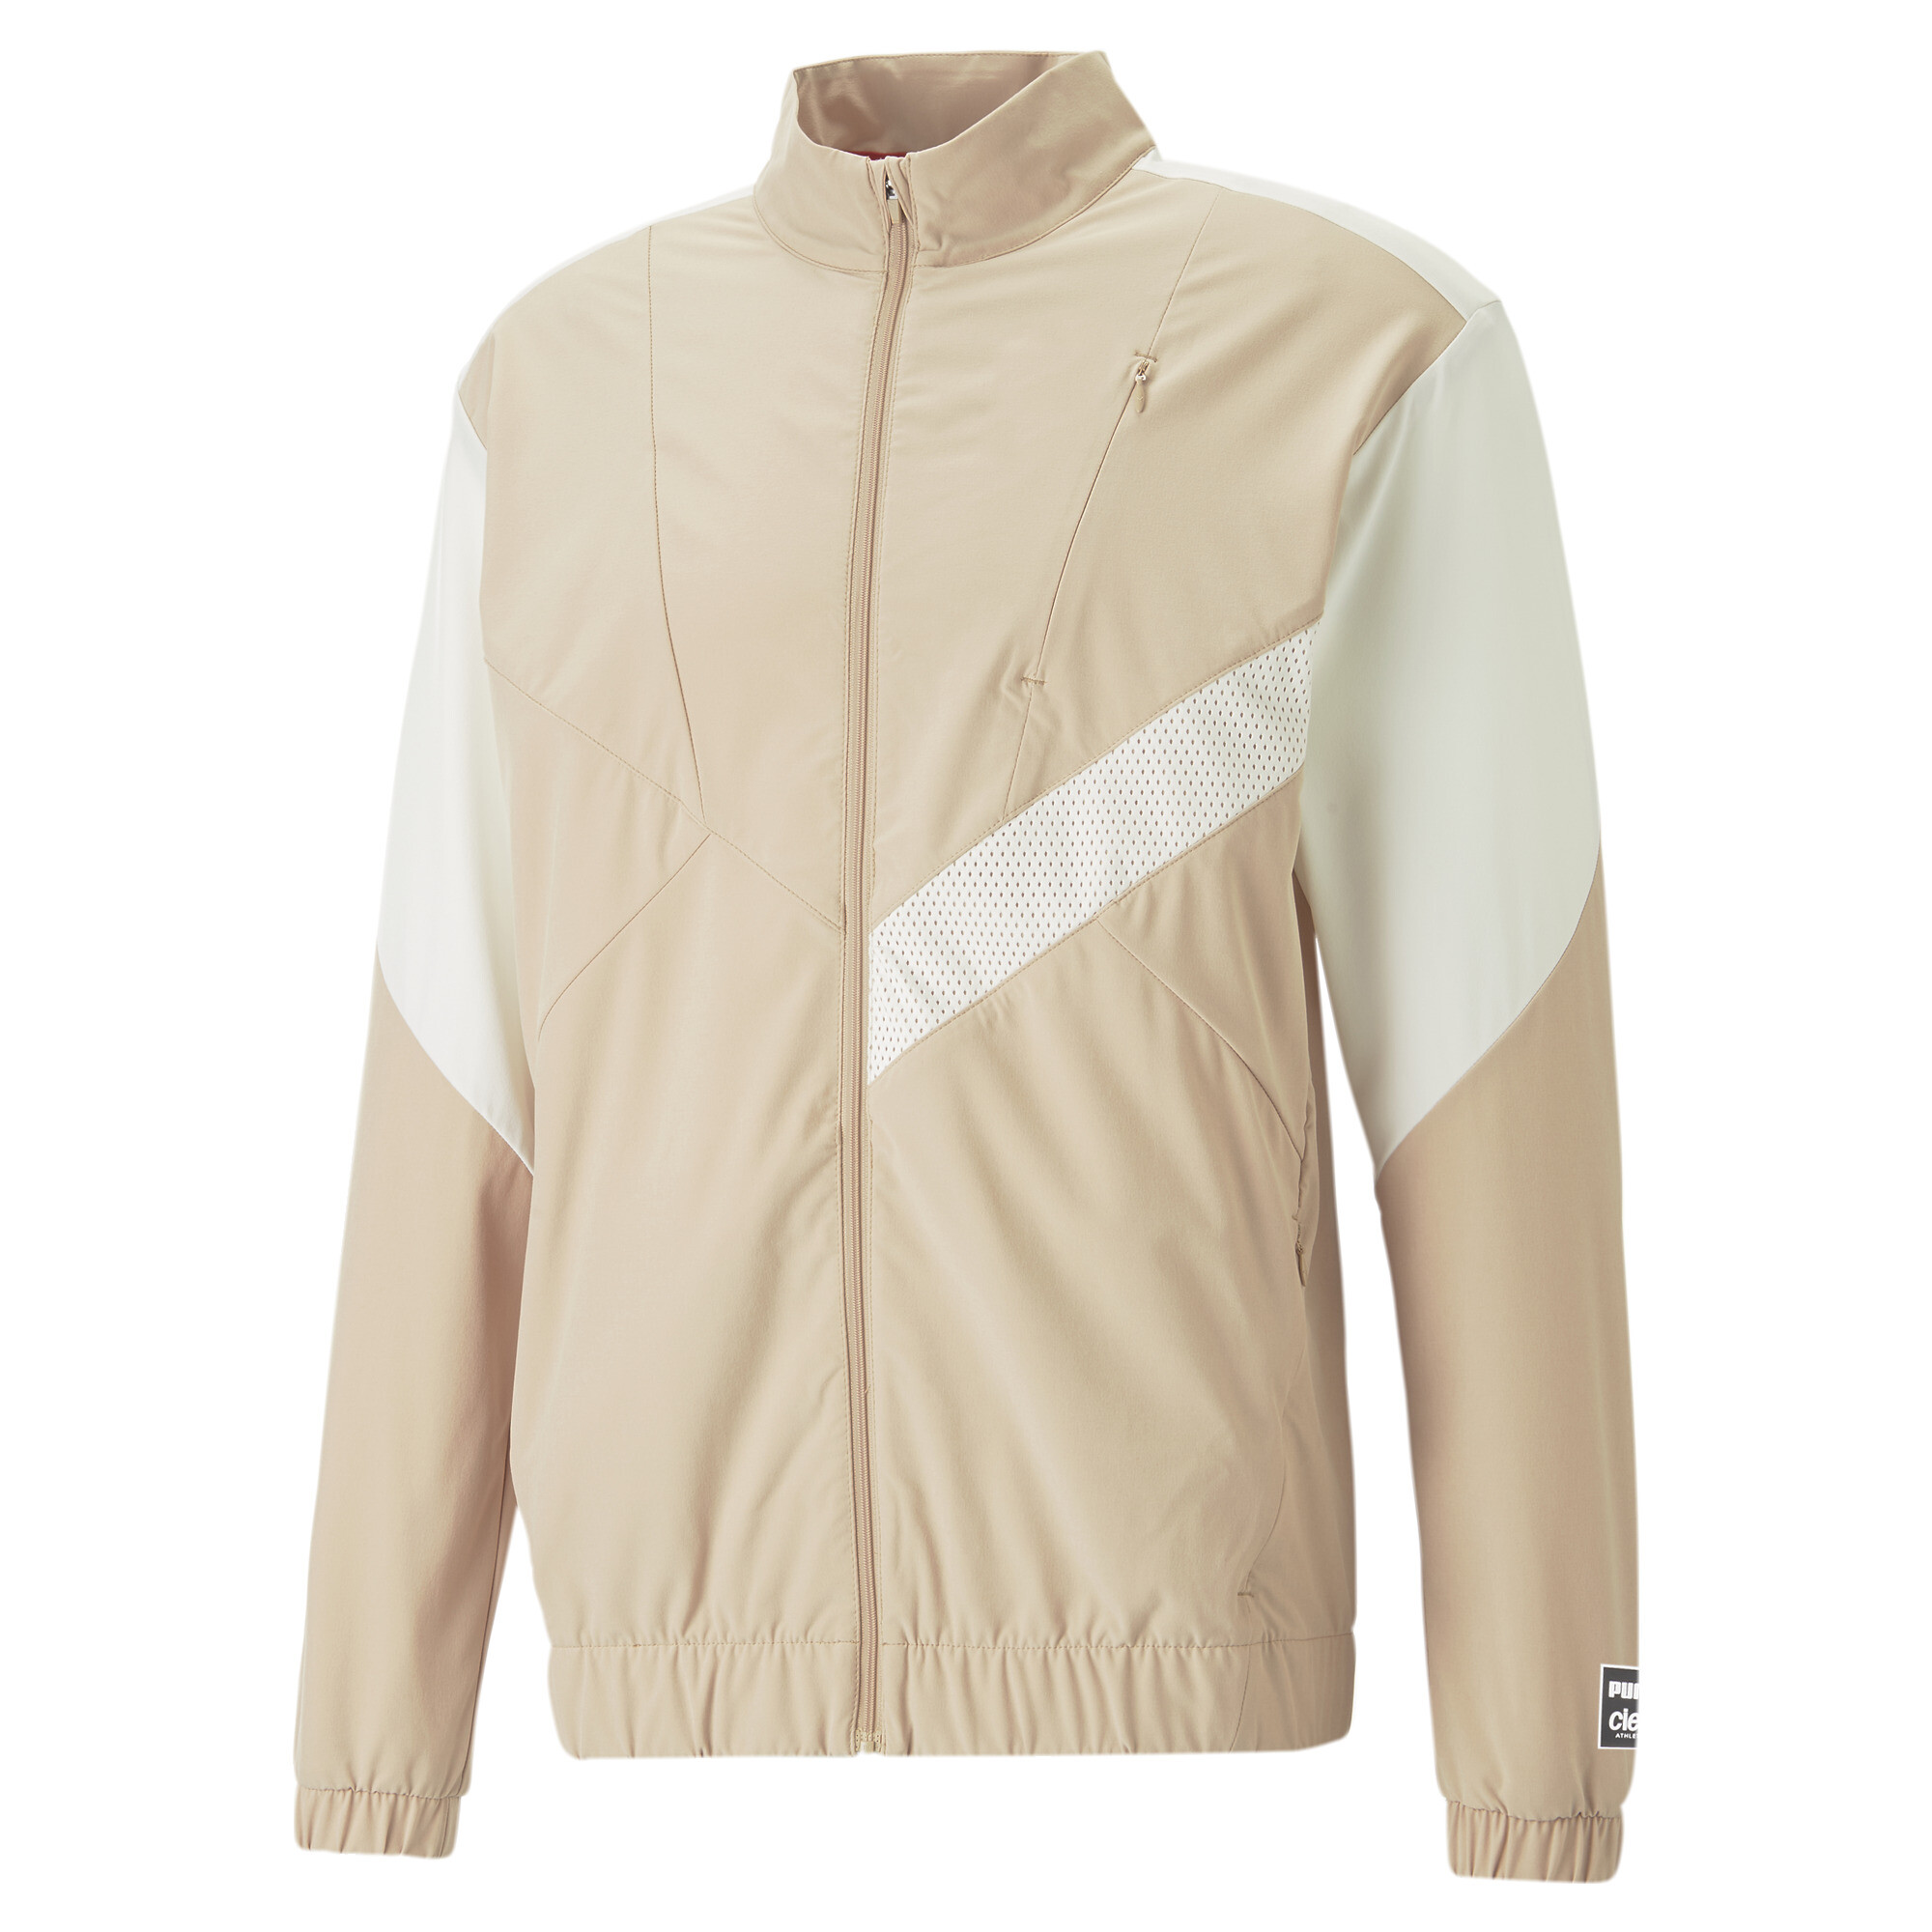 Men's Puma X CIELE Running Tracksuit Jacket, Beige, Size L, Clothing